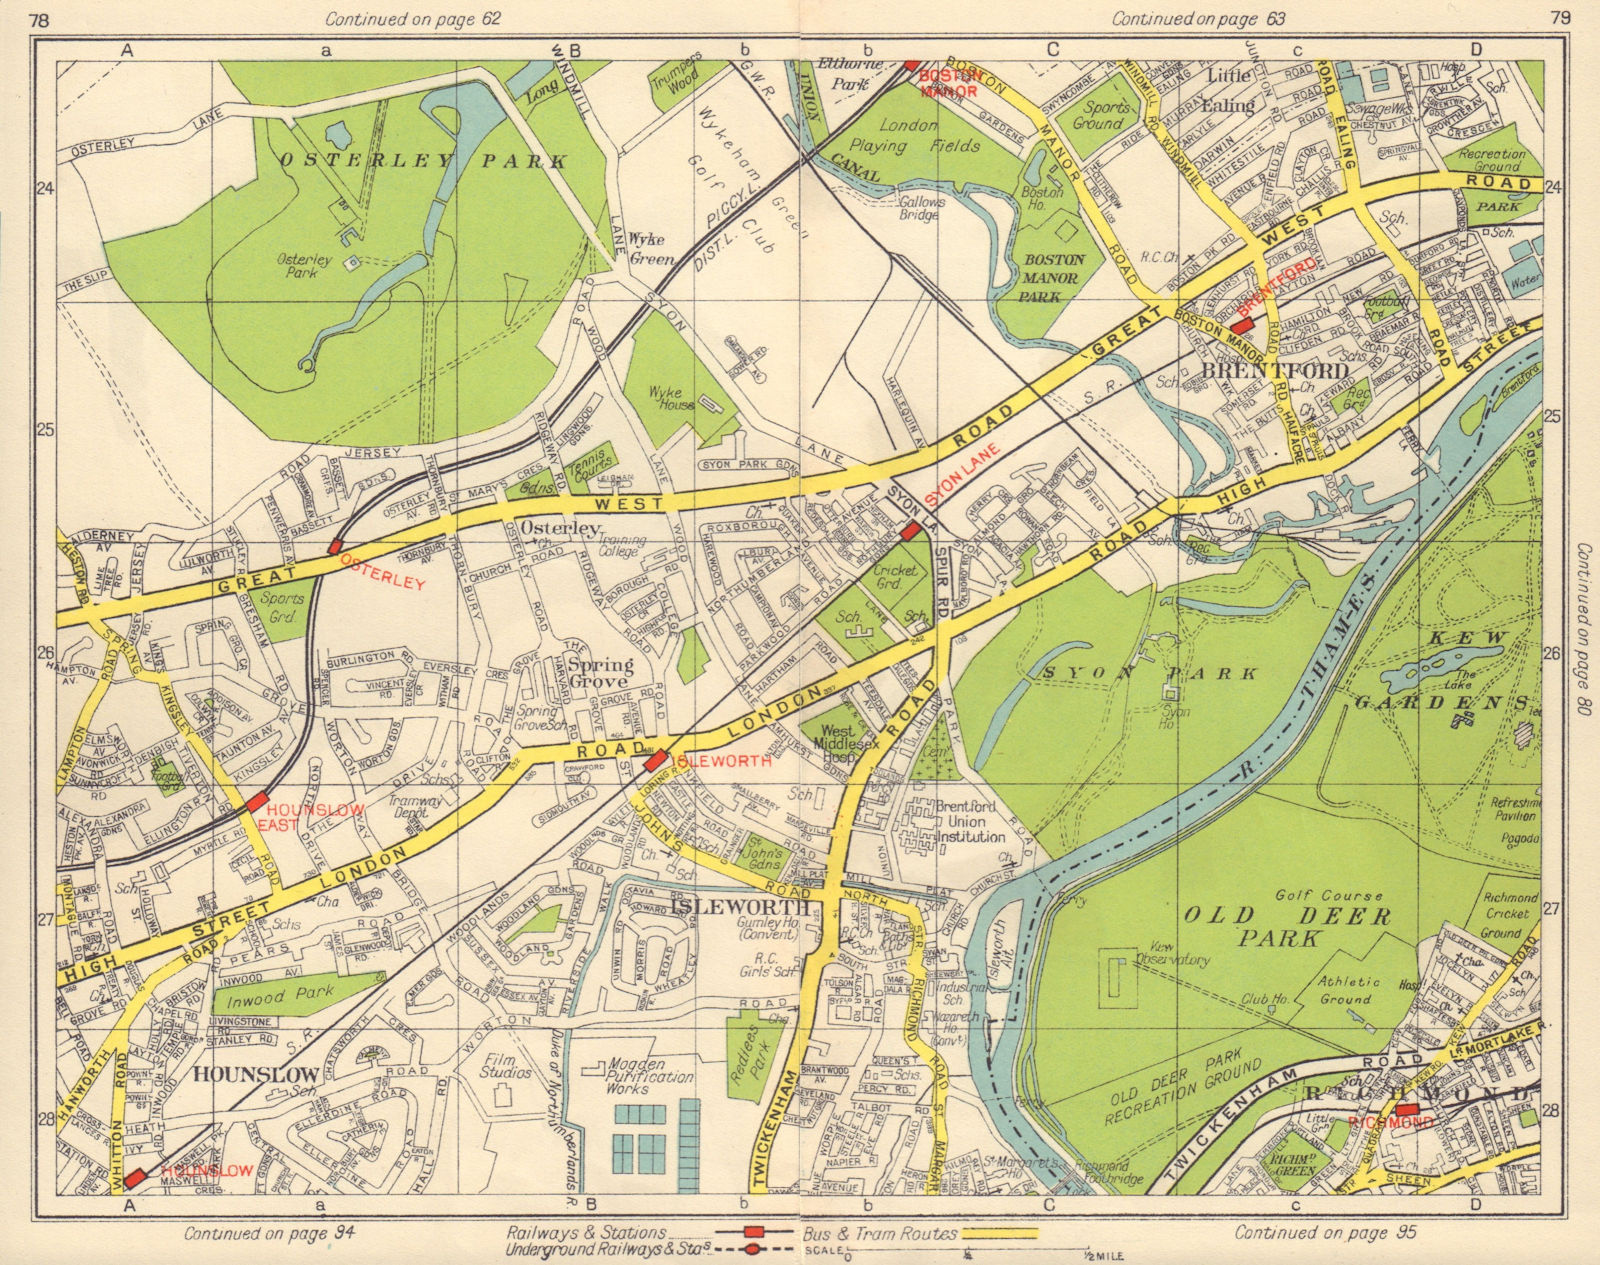 SW LONDON. Hounslow Isleworth Osterley Brentford Richmond Osterley 1948 map